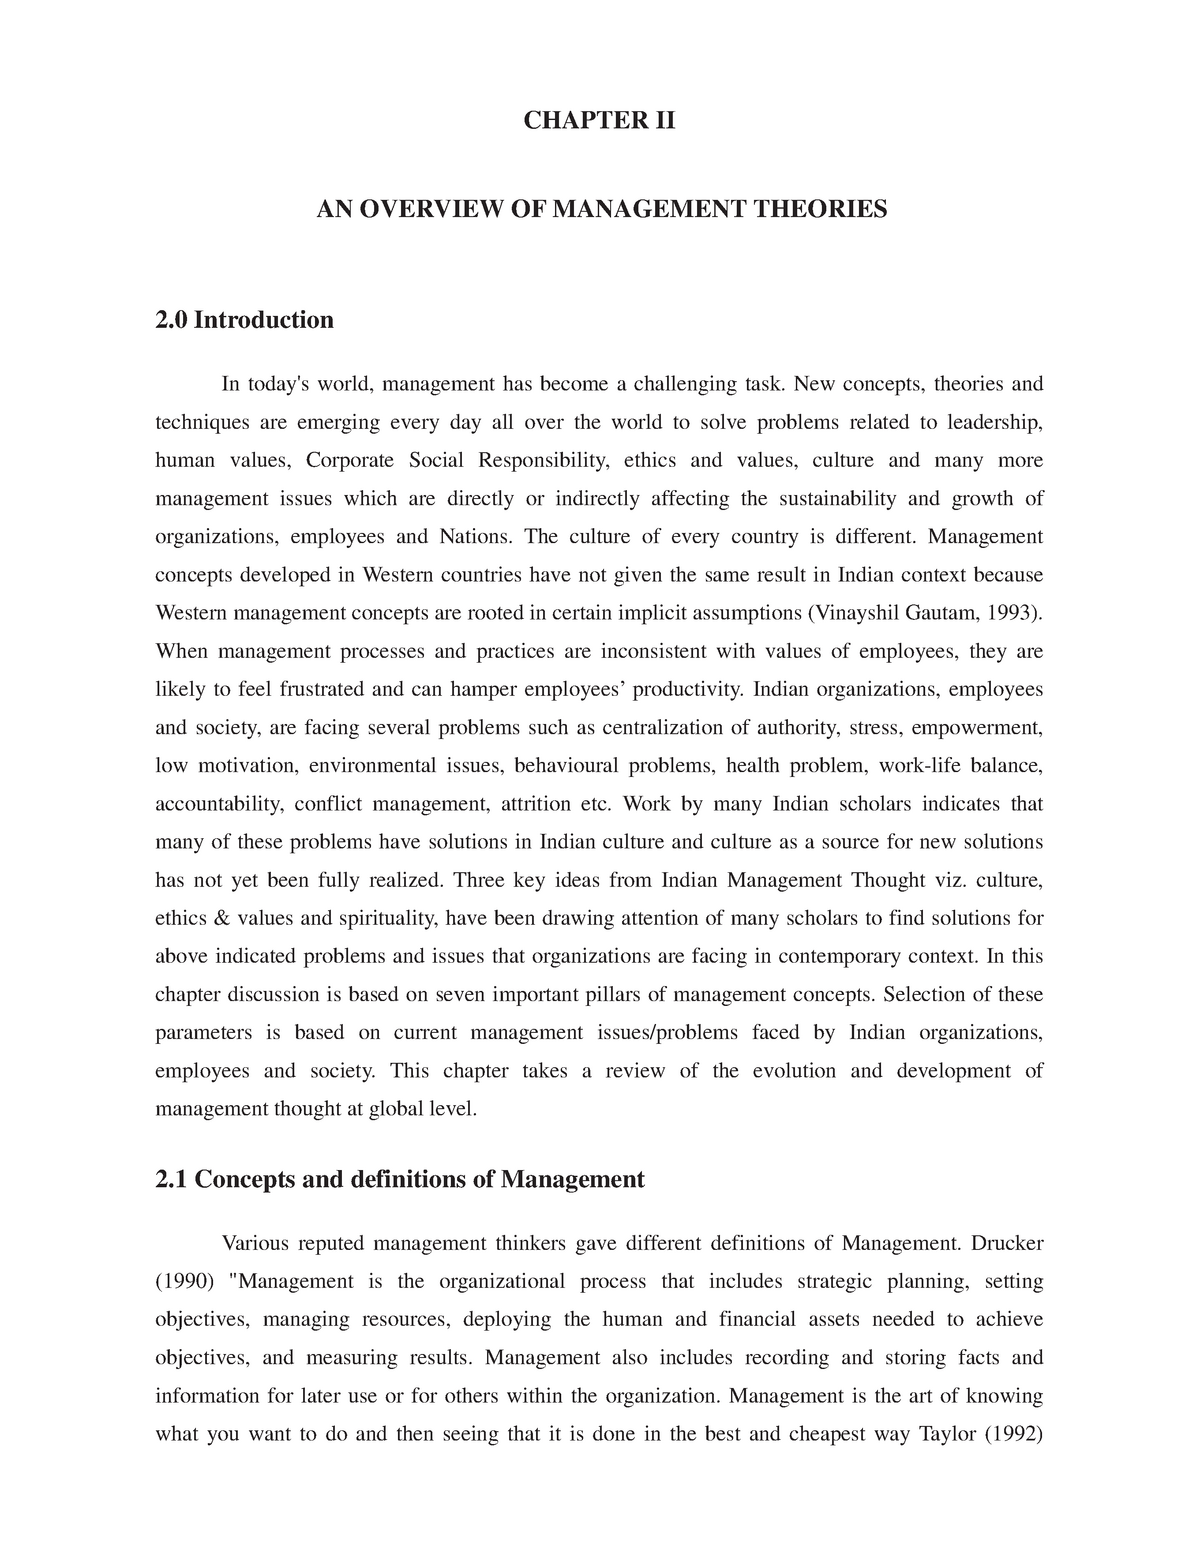 essays on management theories